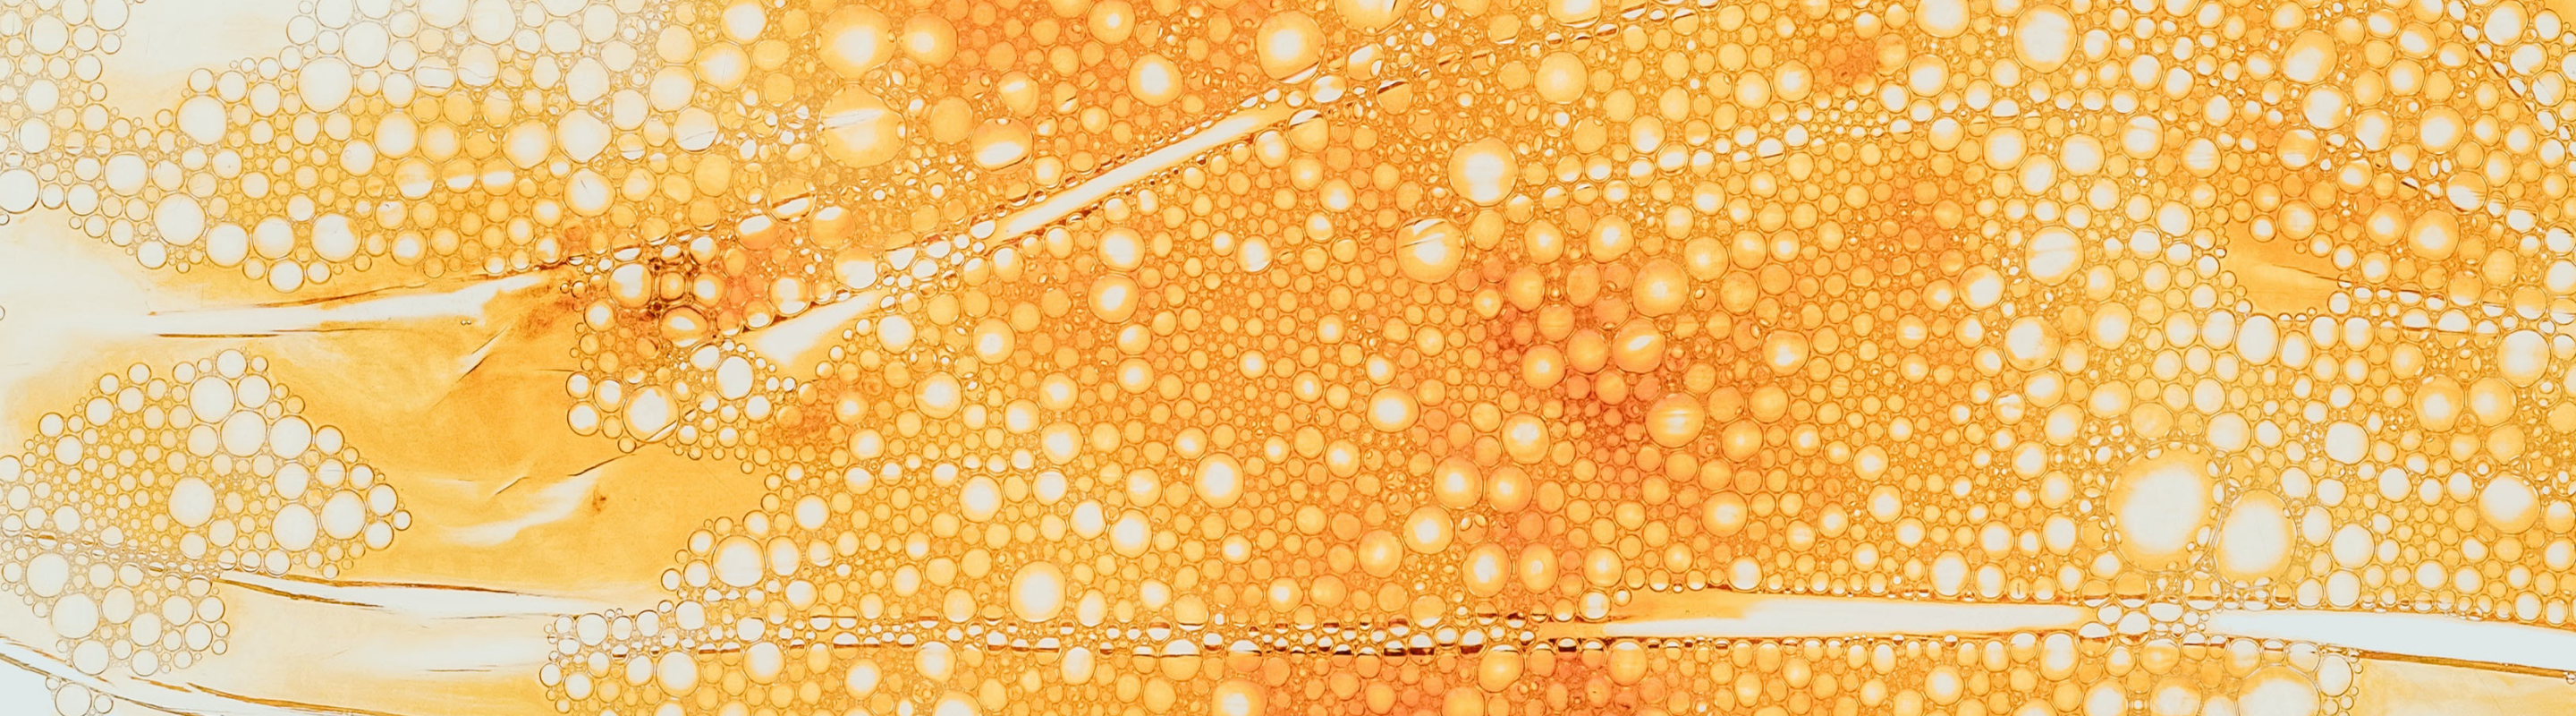 tan bubbles against white background